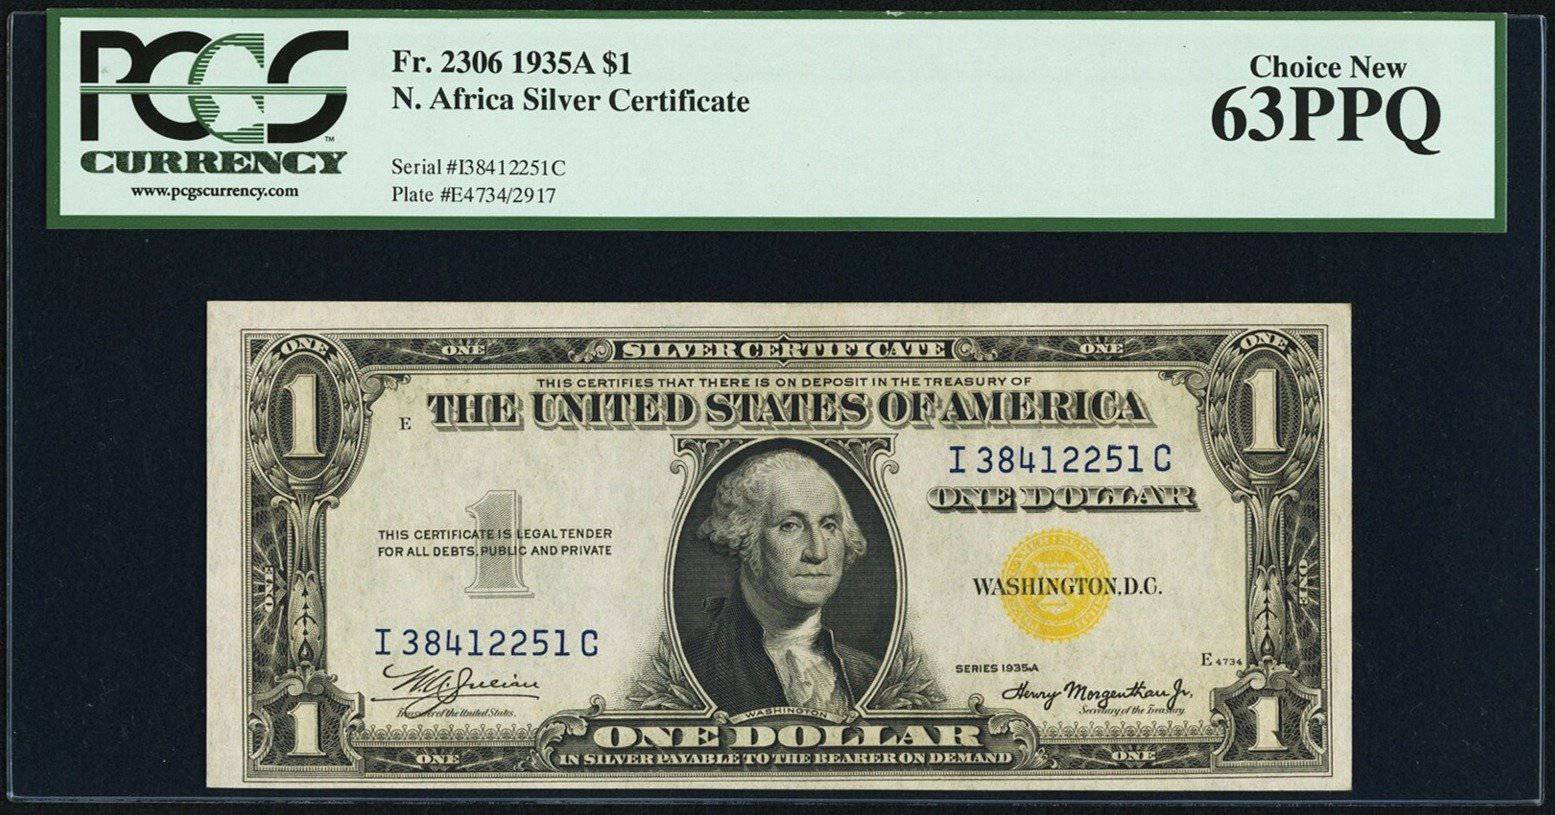 1935A $1 North Africa Silver Certificate Fr. 2306 PCGS Ch New 63 PPQ - Hard Asset Management, Inc